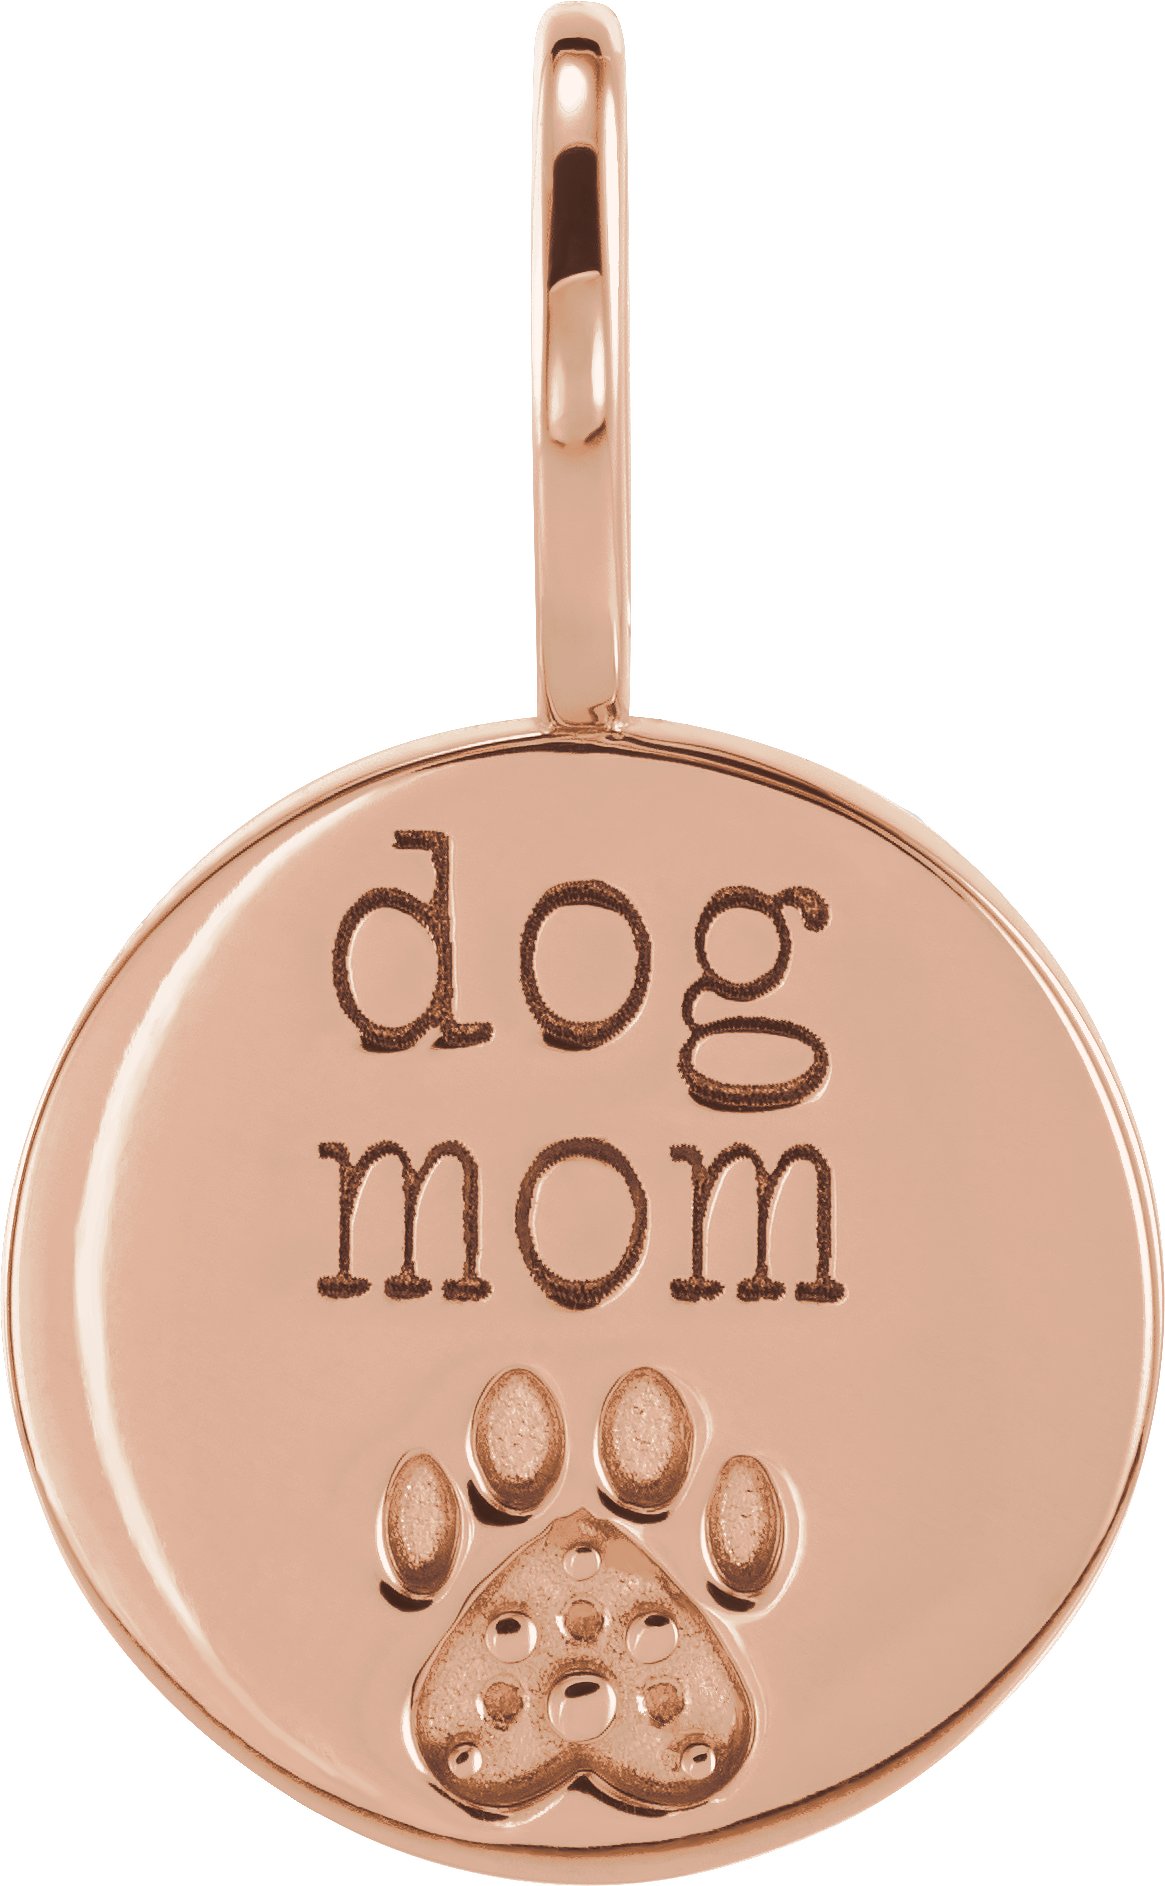 14K Rose Engraved Dog Mom Paw Print Charm/Pendant Mounting